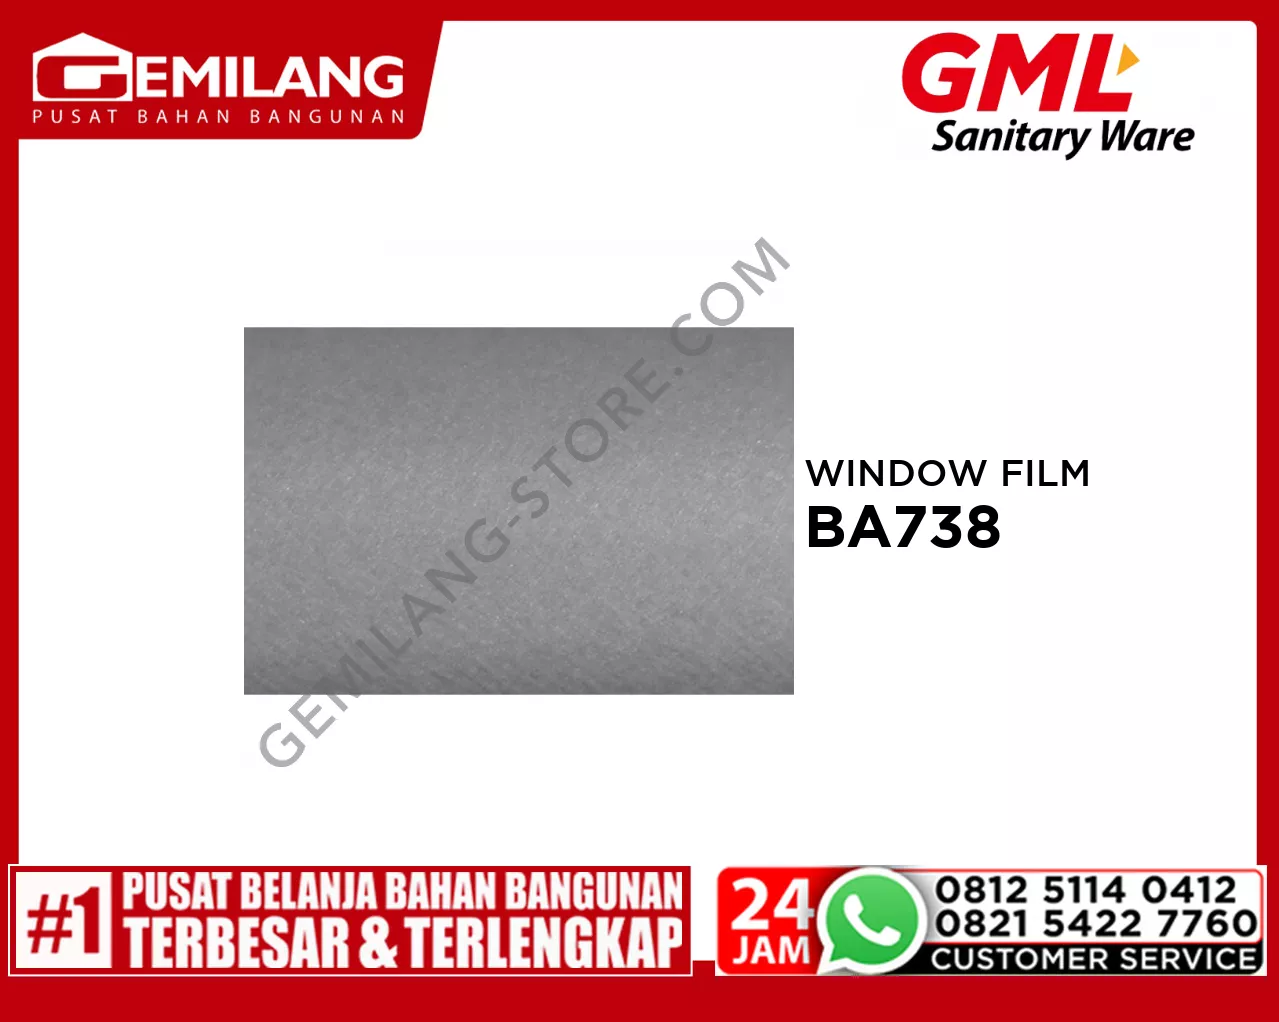 GML 2D STATIC WINDOW FILM BA738 50 x 90cm x 0.18mm